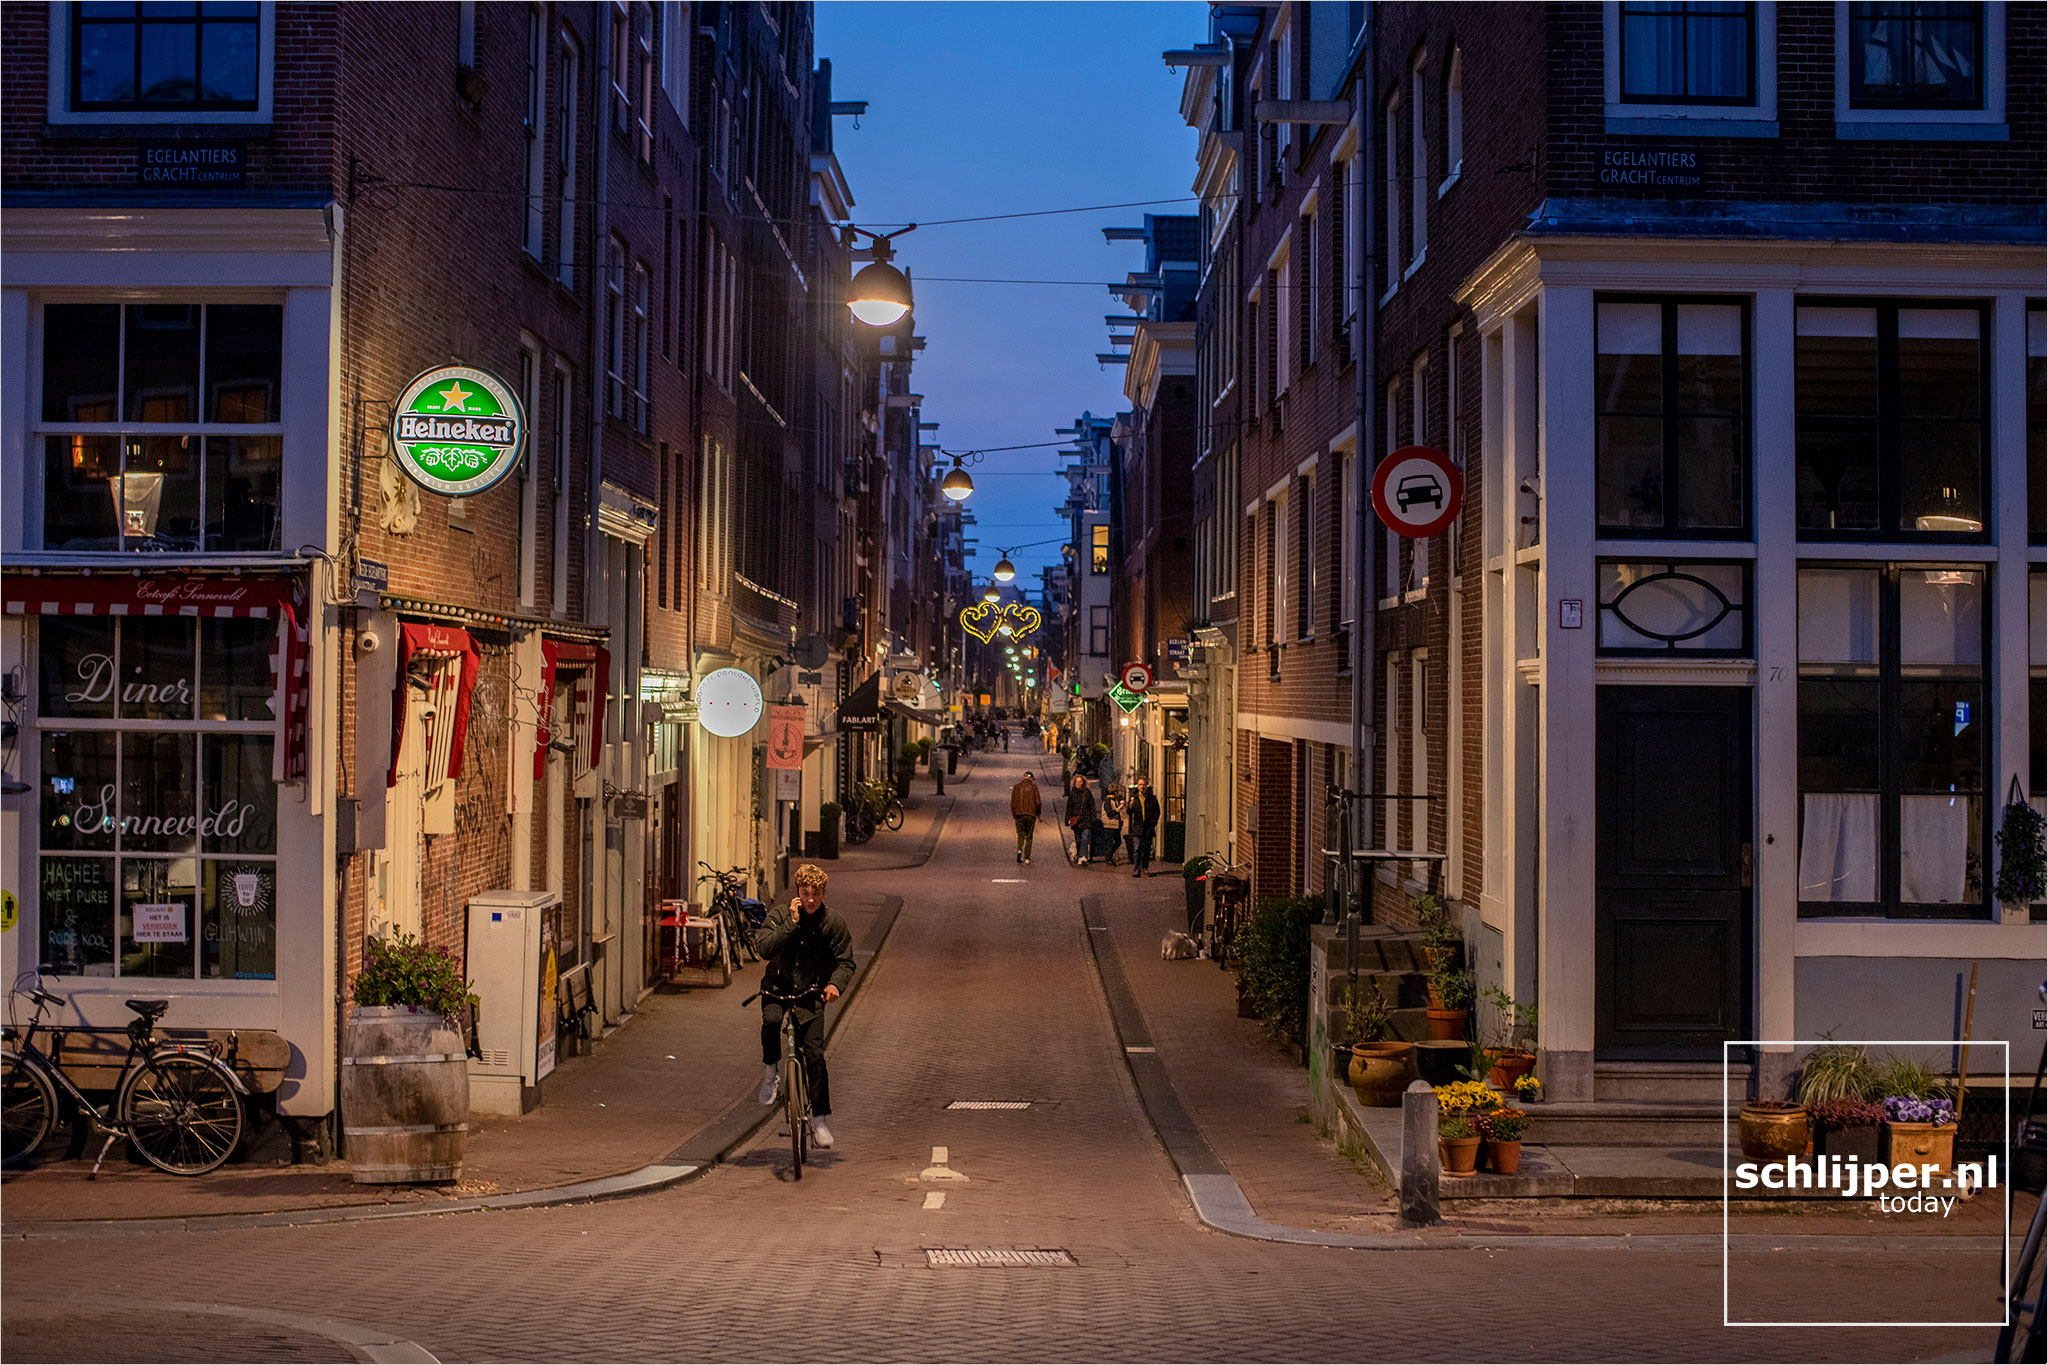 The Netherlands, Amsterdam, 17 april 2021